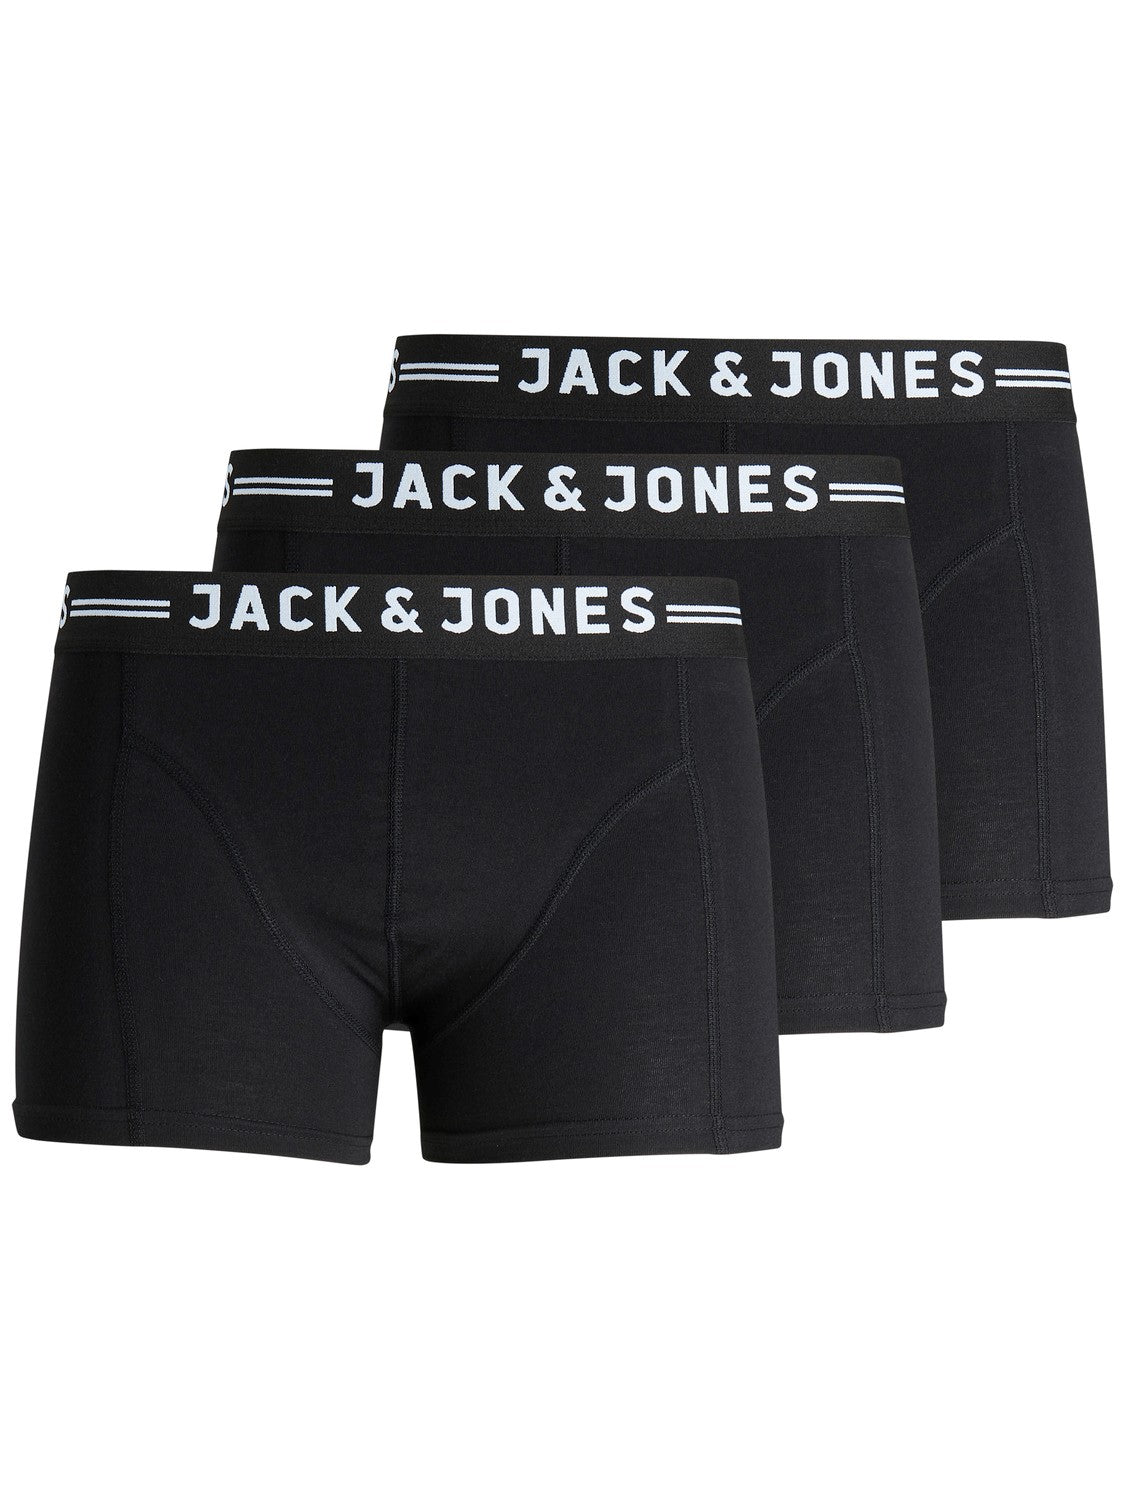 Sense  3 Pack Boxers By Jack Jones - Spirit Clothing